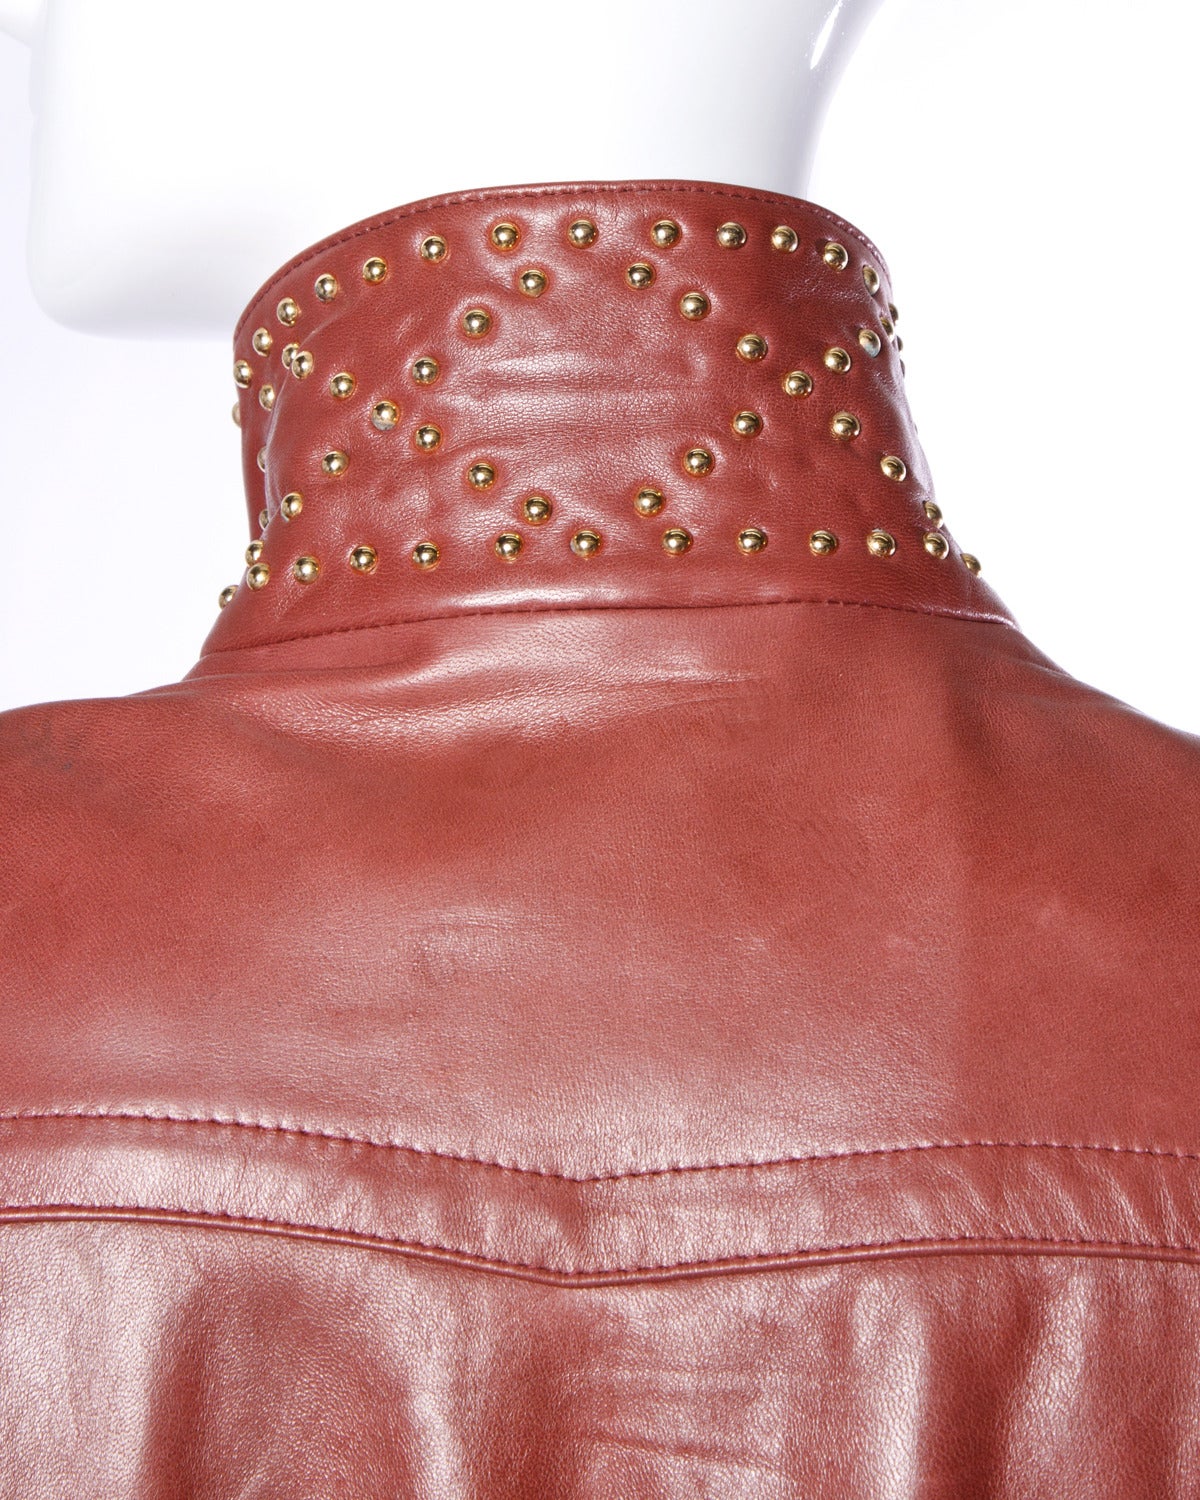 Unworn 1990 Escada Buttery Leather Jacket with Original Tags & Garment Bag 2